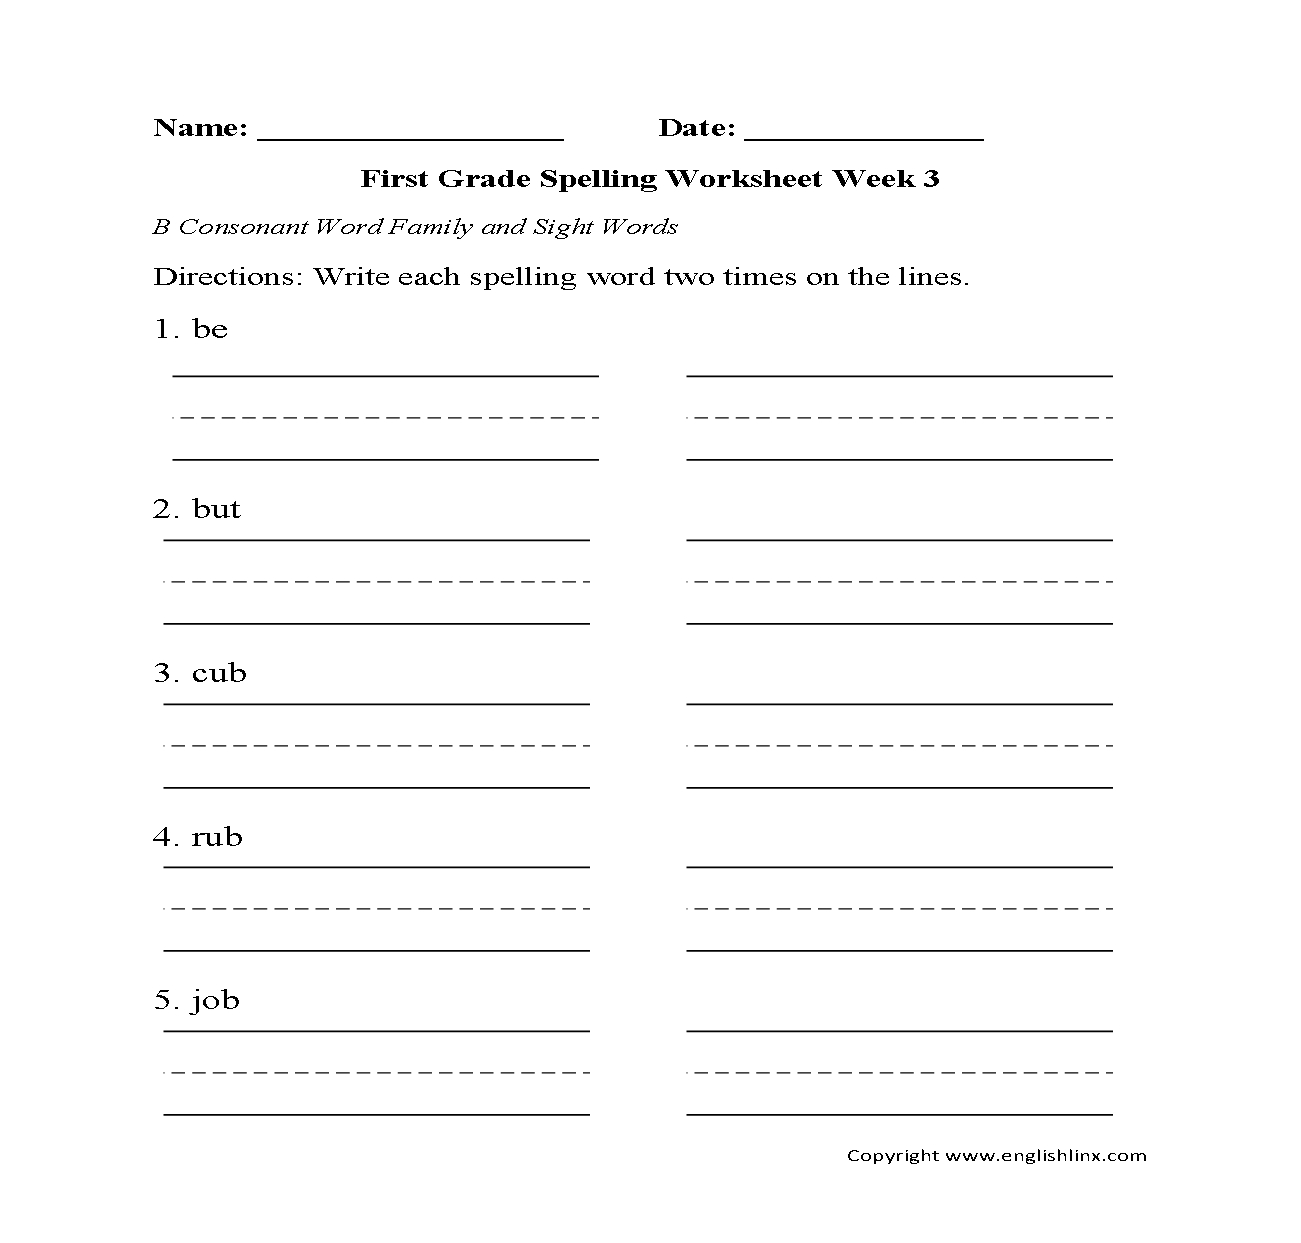 Spelling Worksheets  First Grade Spelling Worksheets Pertaining To Free Printable Spelling Worksheets For Grade 1